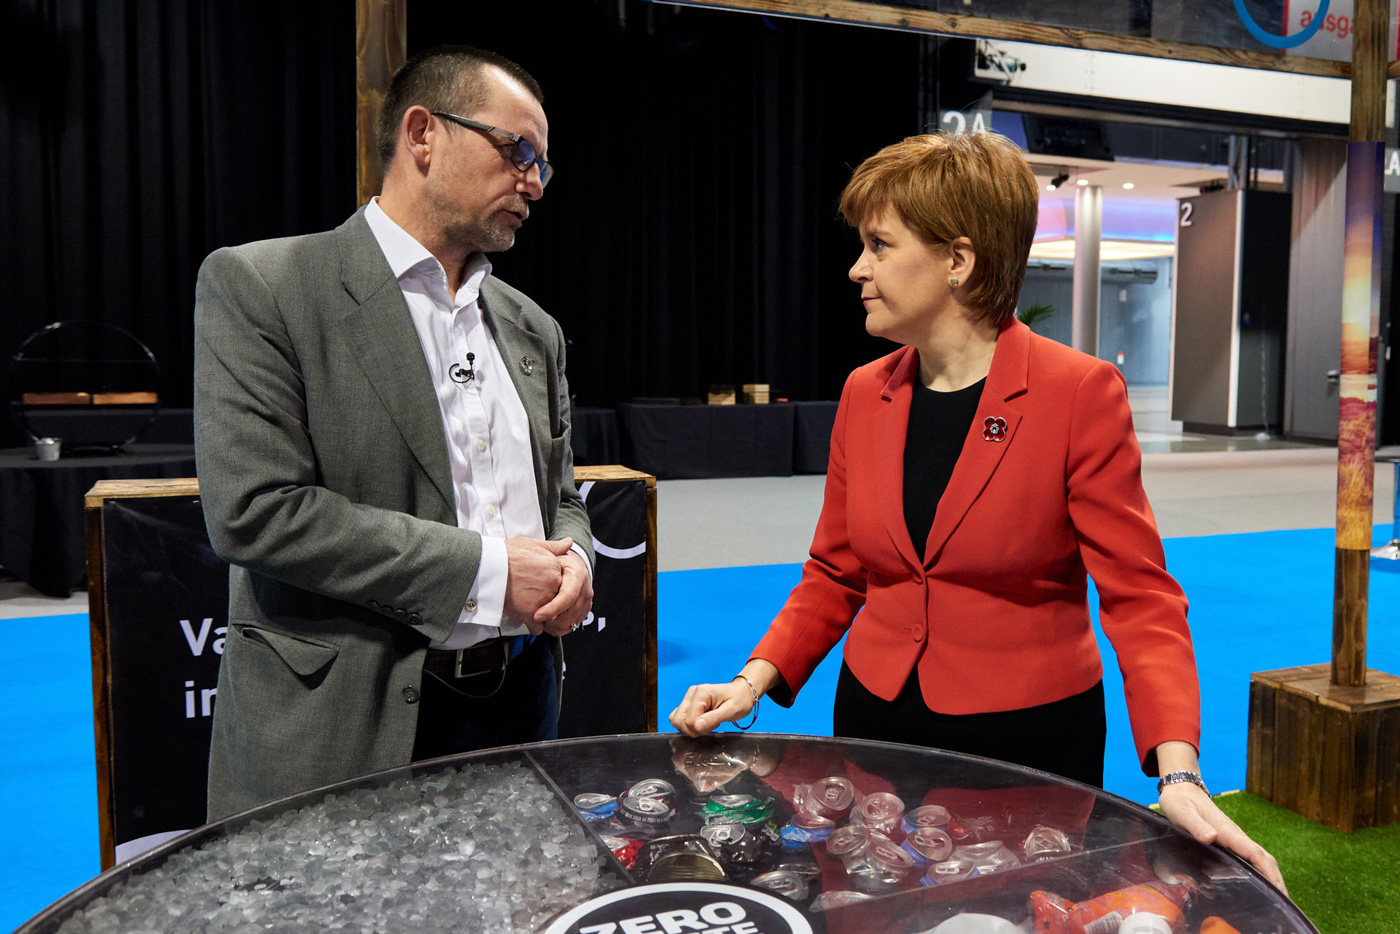 Iain Gulland, CEO, Zero Waste Scotland & Nicola Sturgeon, First Minister